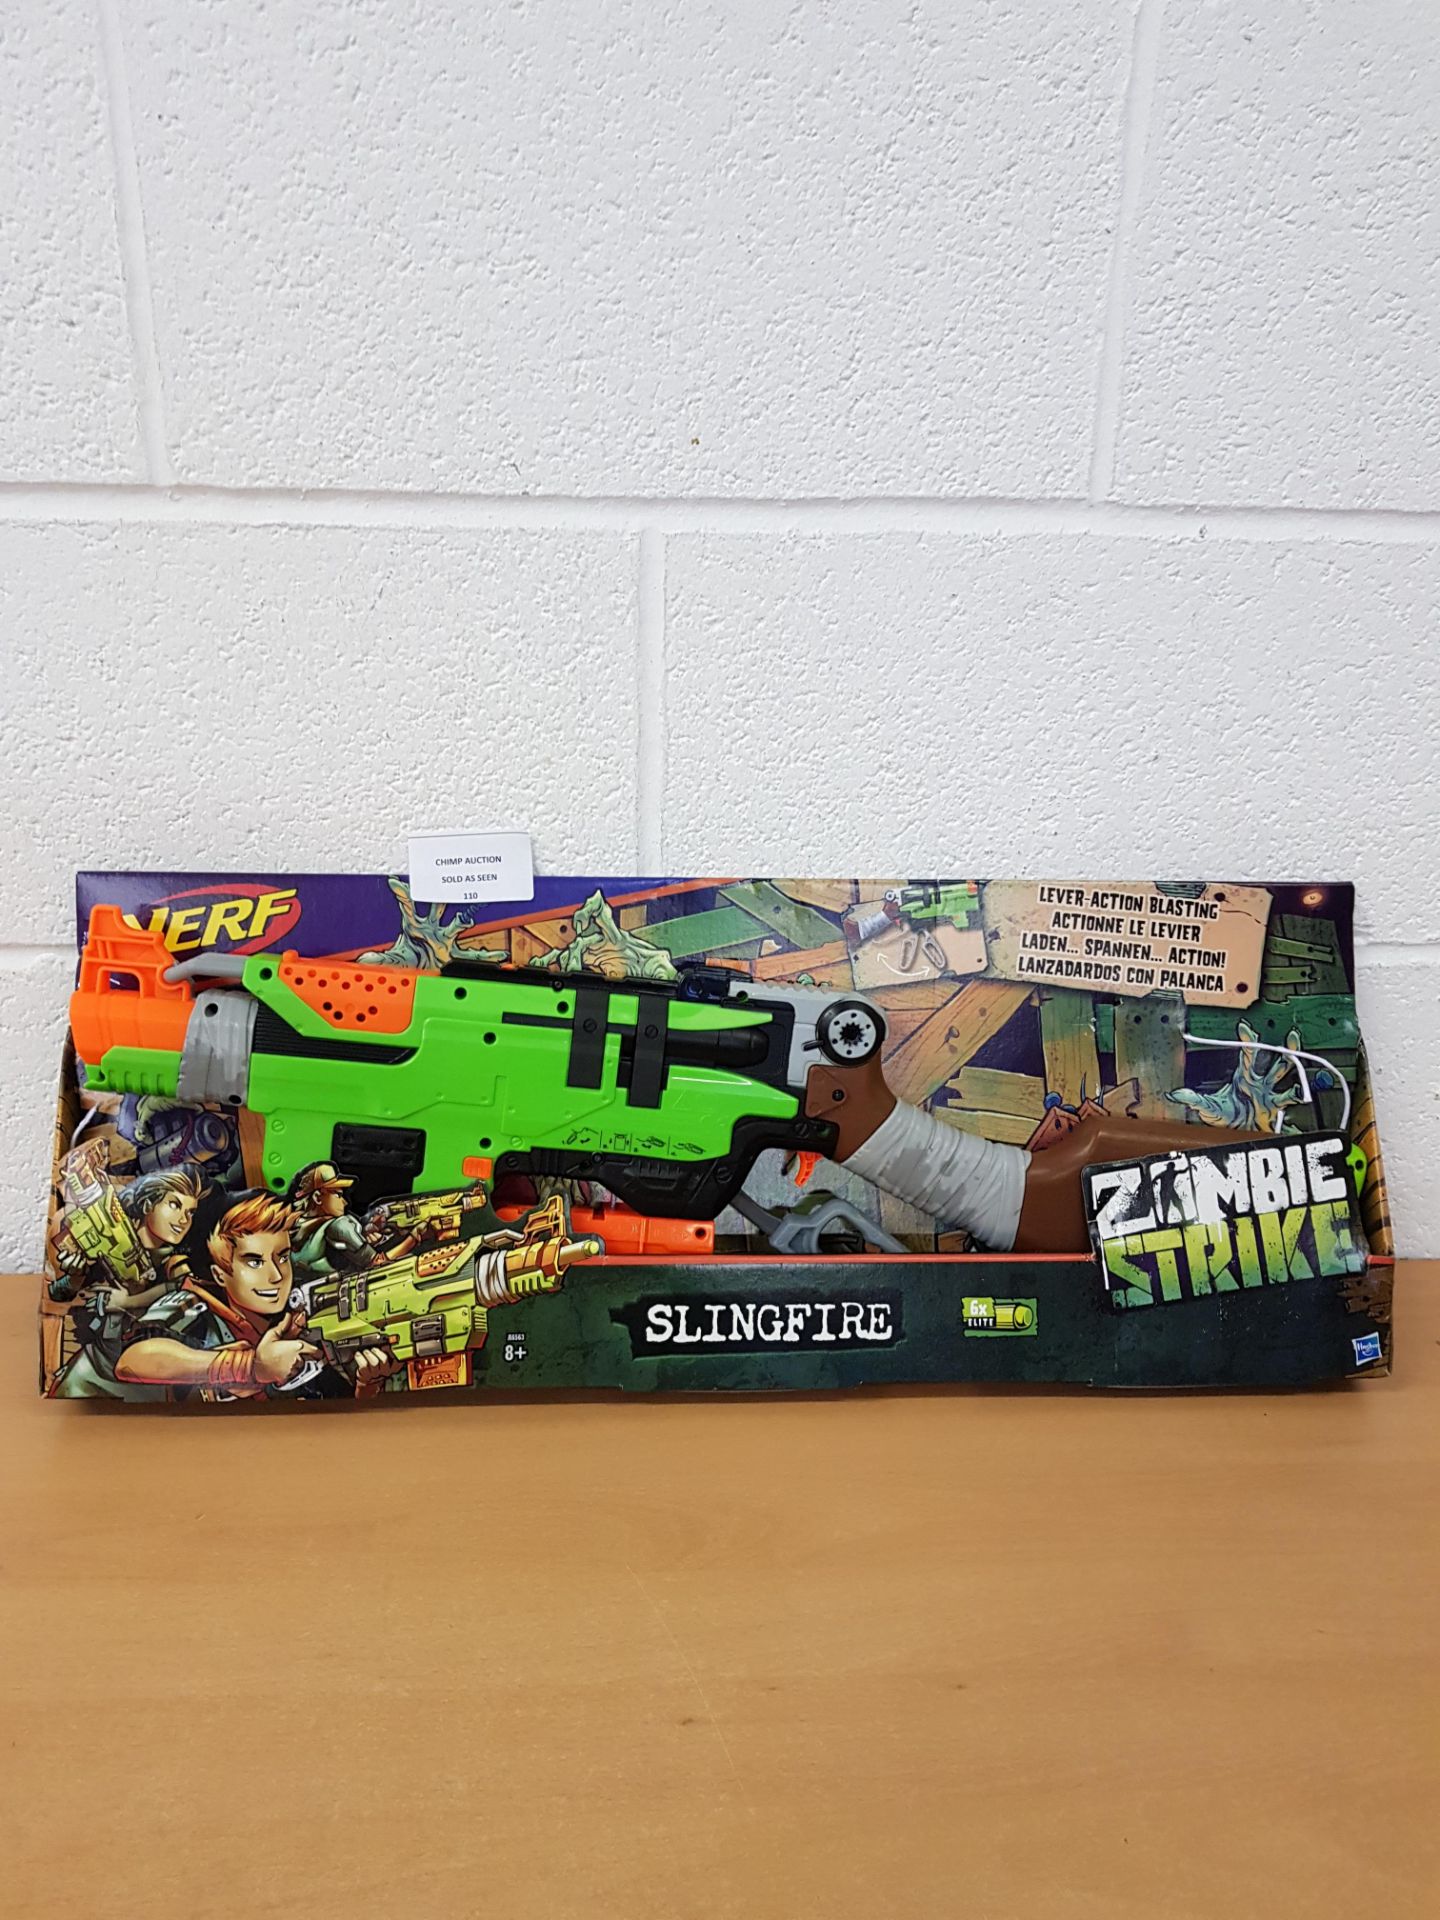 Nerf Zombie Strike Slingfire Shooter